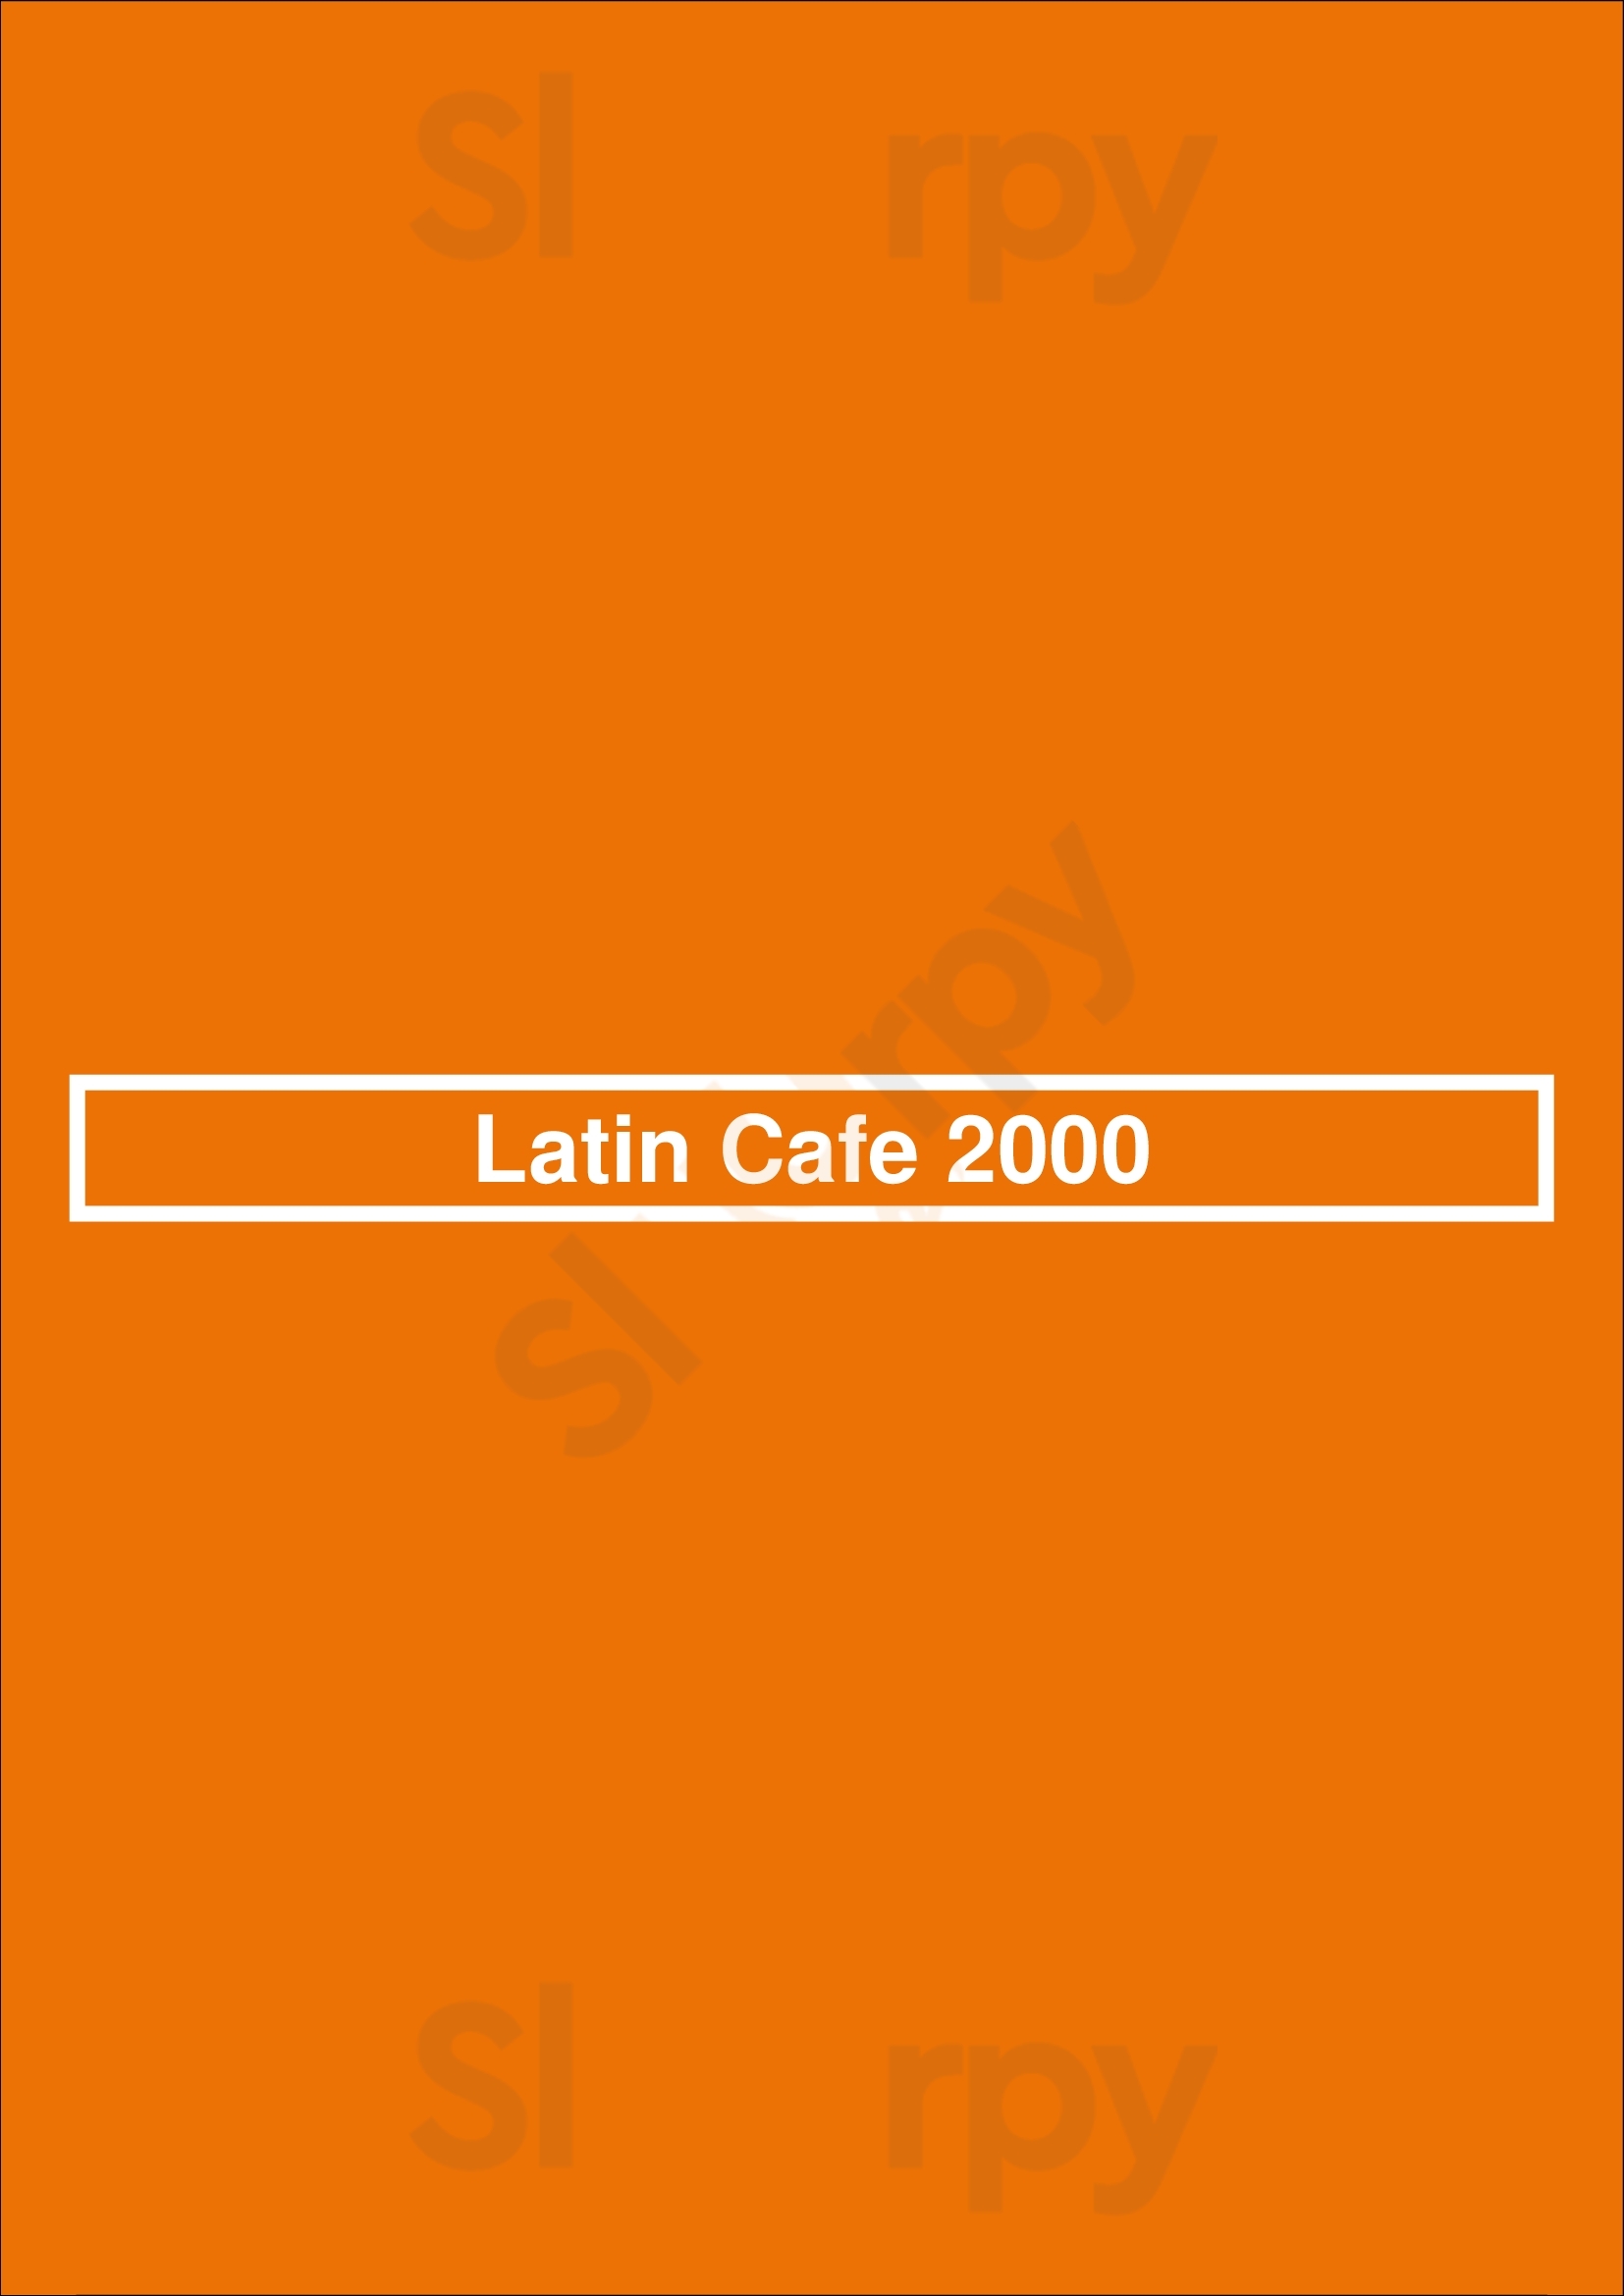 Latin Cafe 2000 Miami Menu - 1